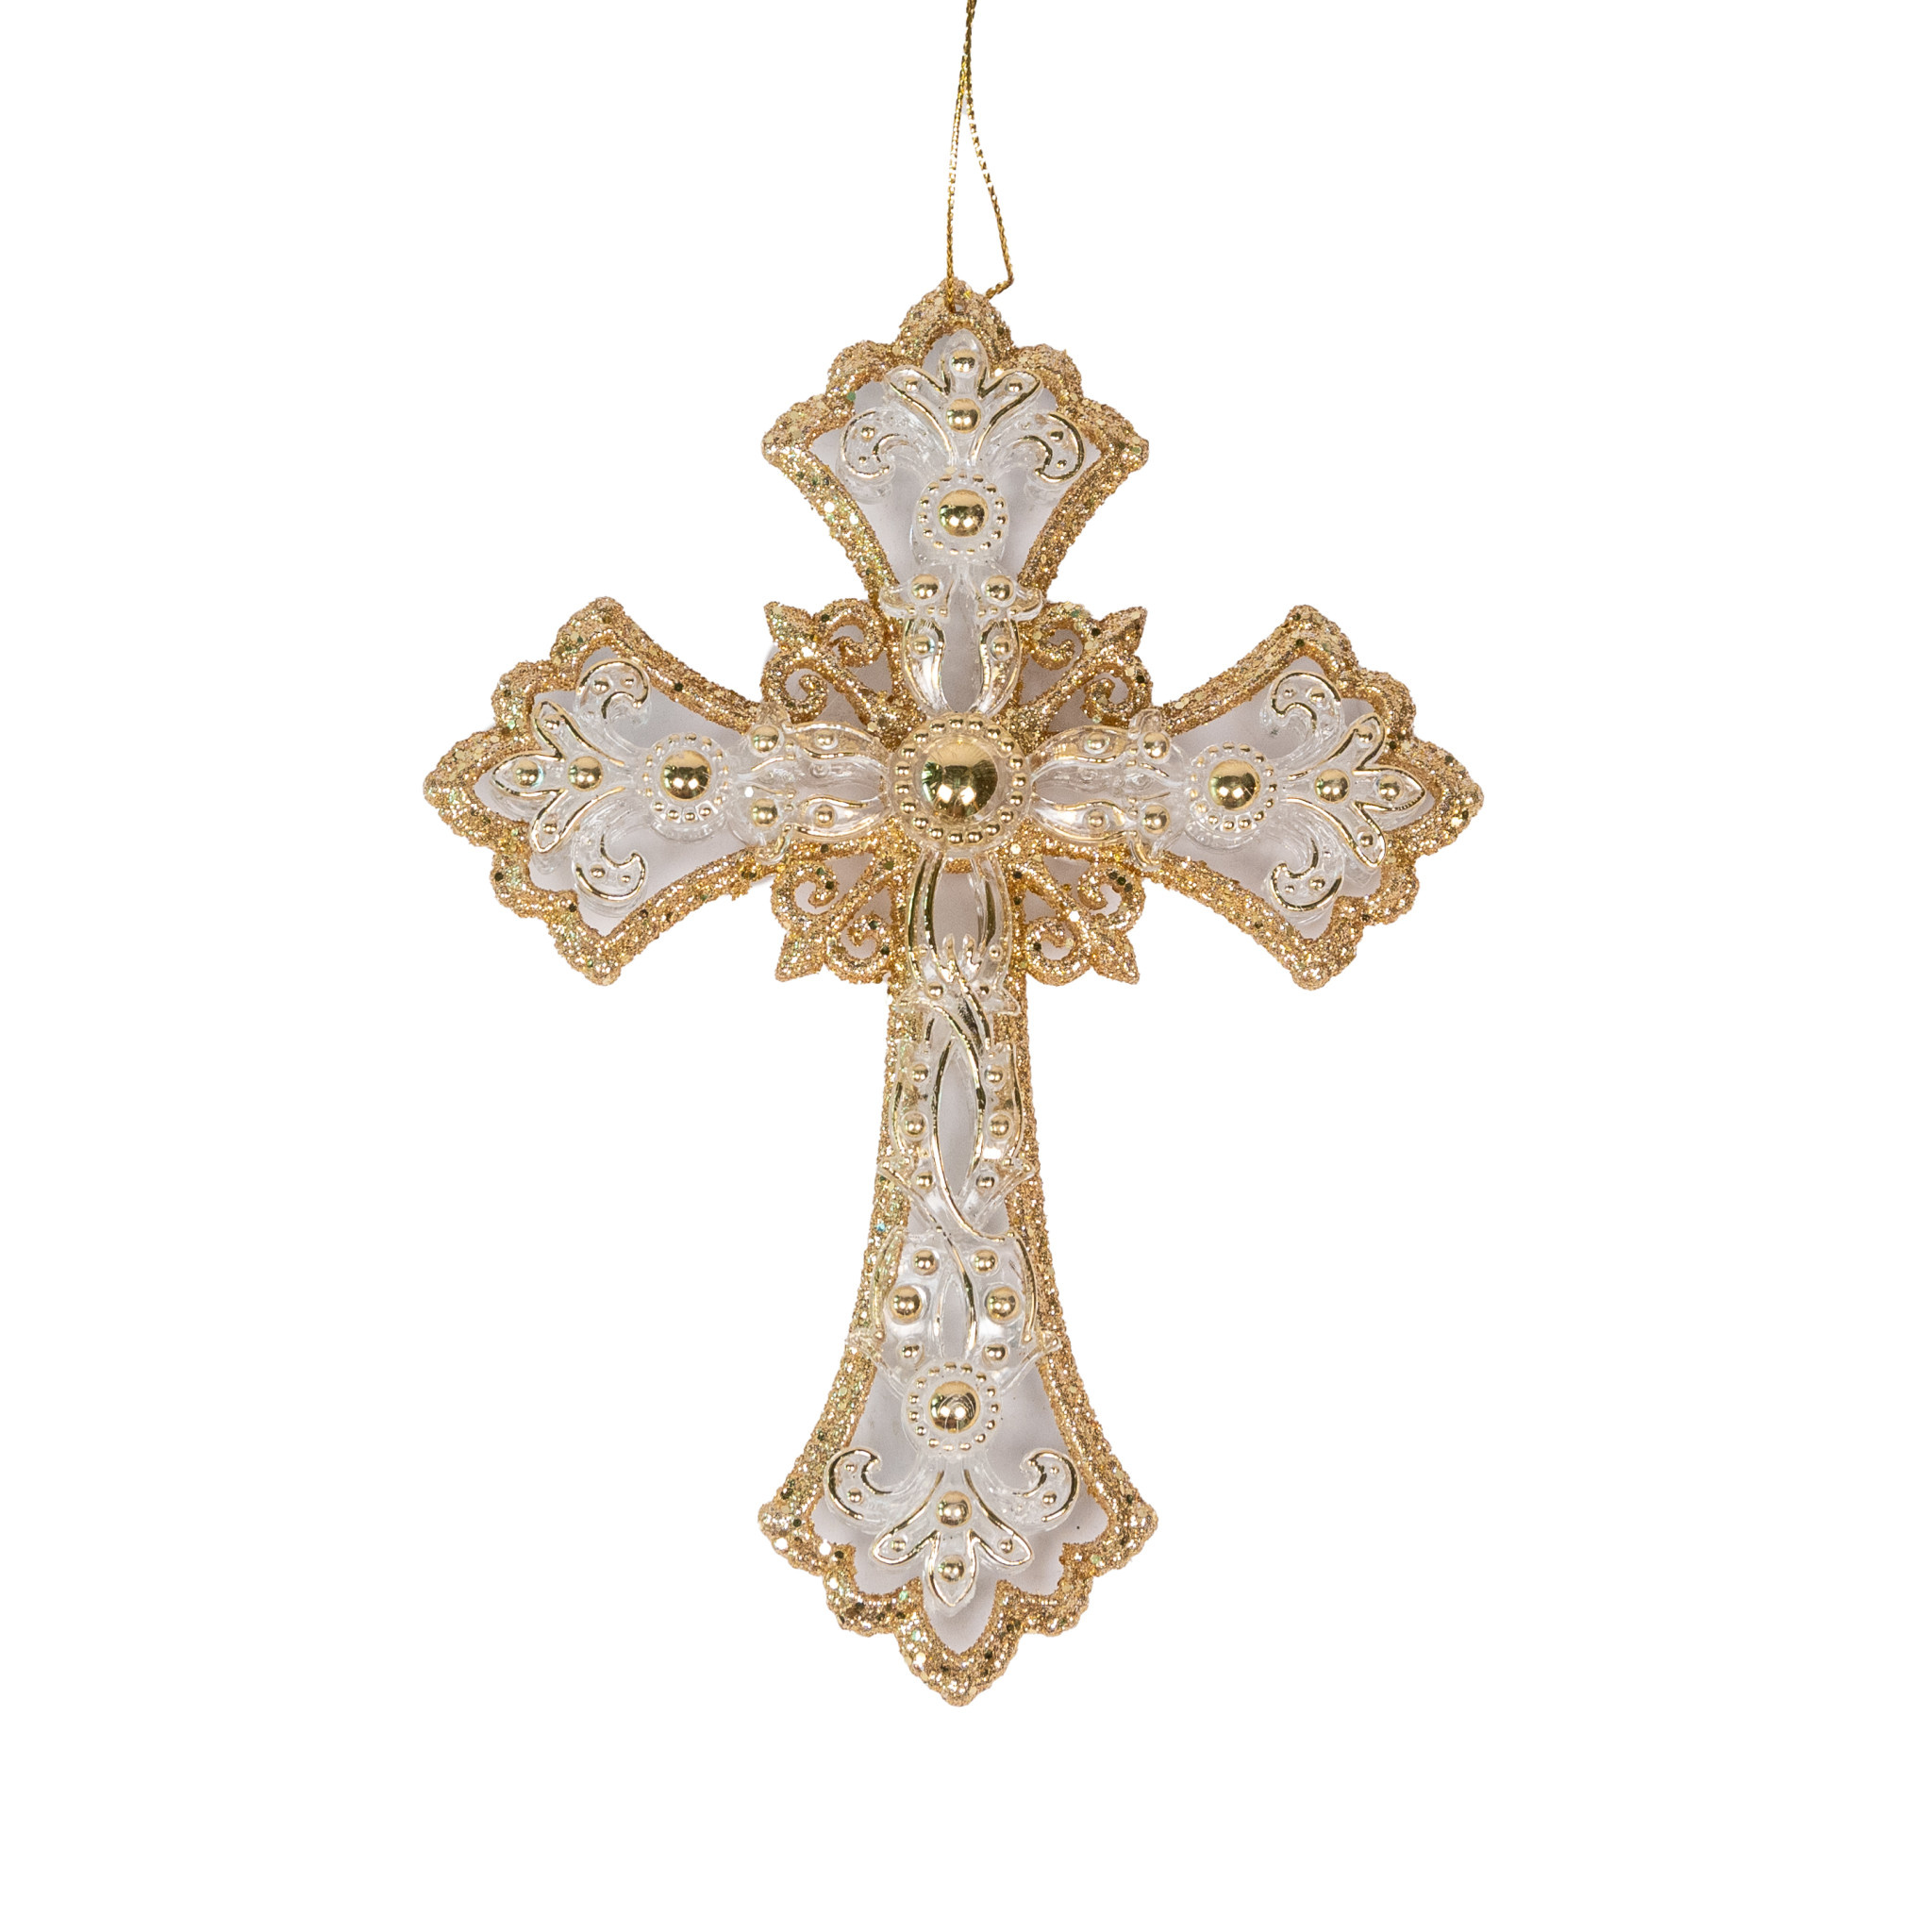 Jeweled Cross Ornament - 5"